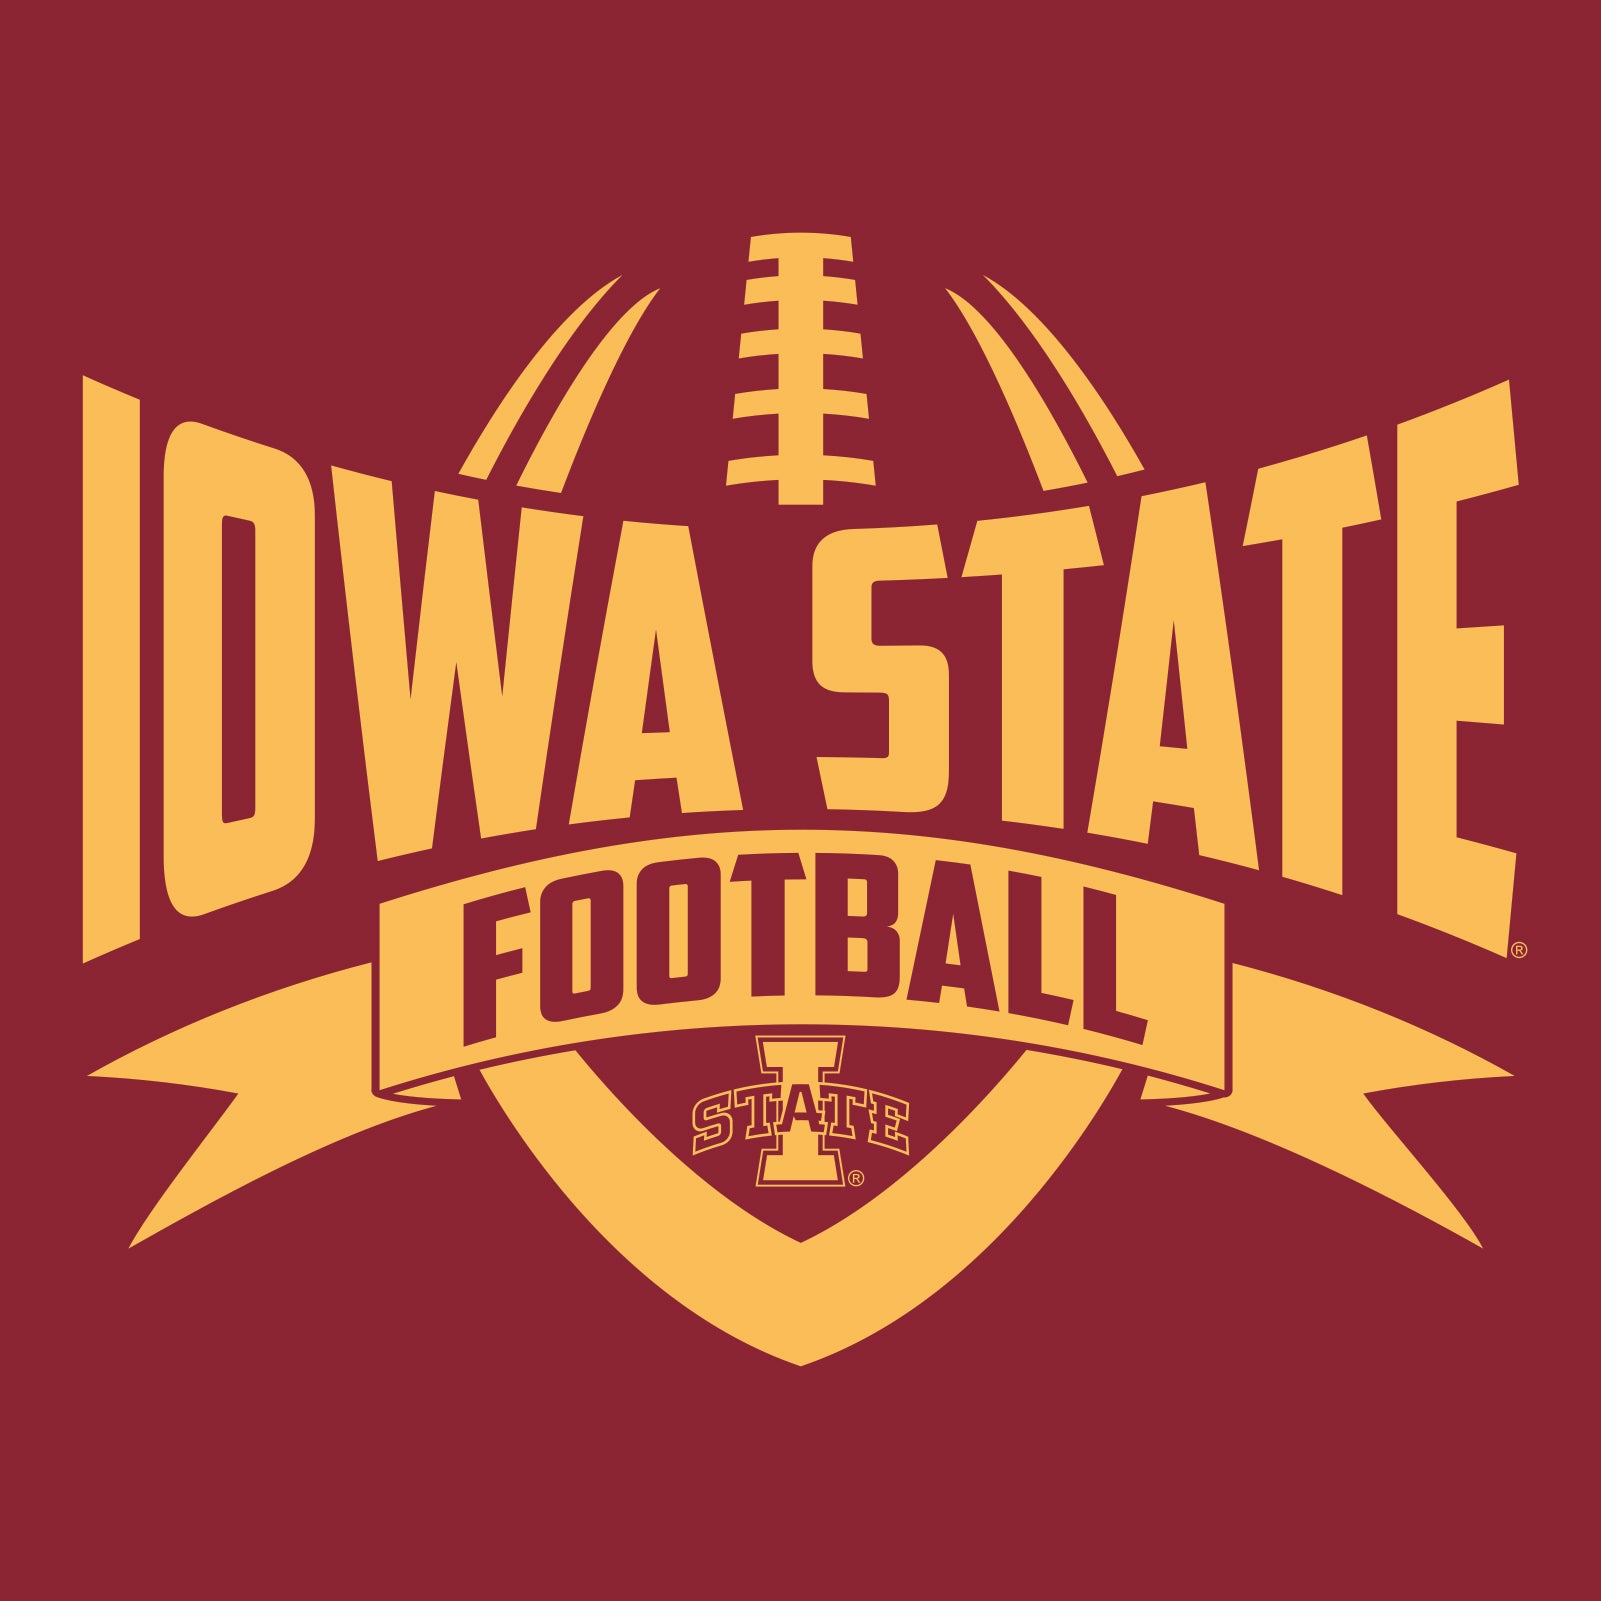 iowa state football jerseys for sale